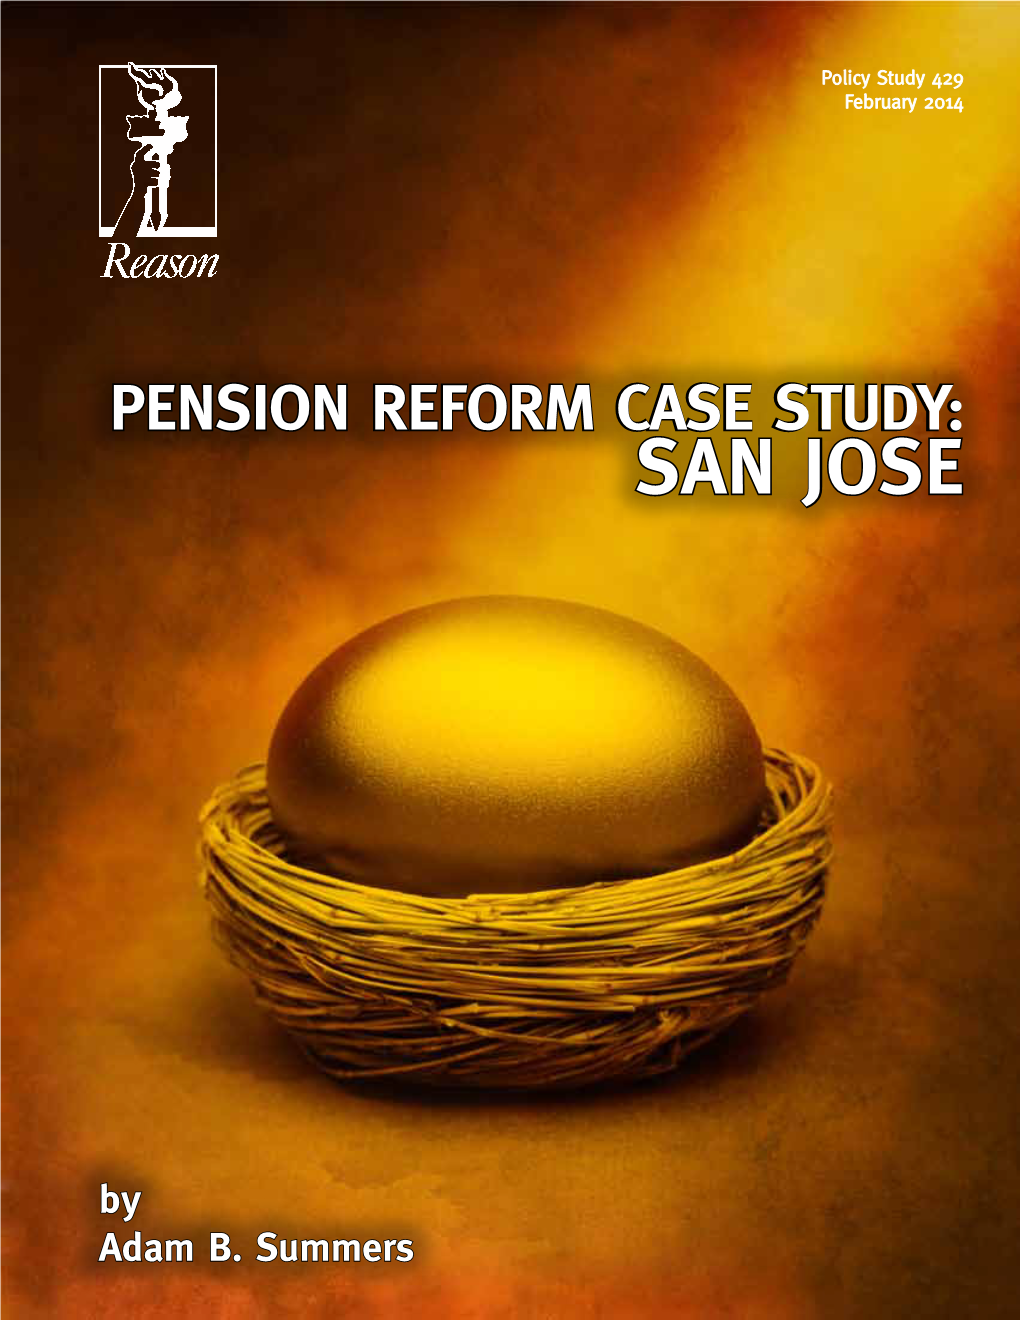 Pension Reform Case Study: SAN JOSE